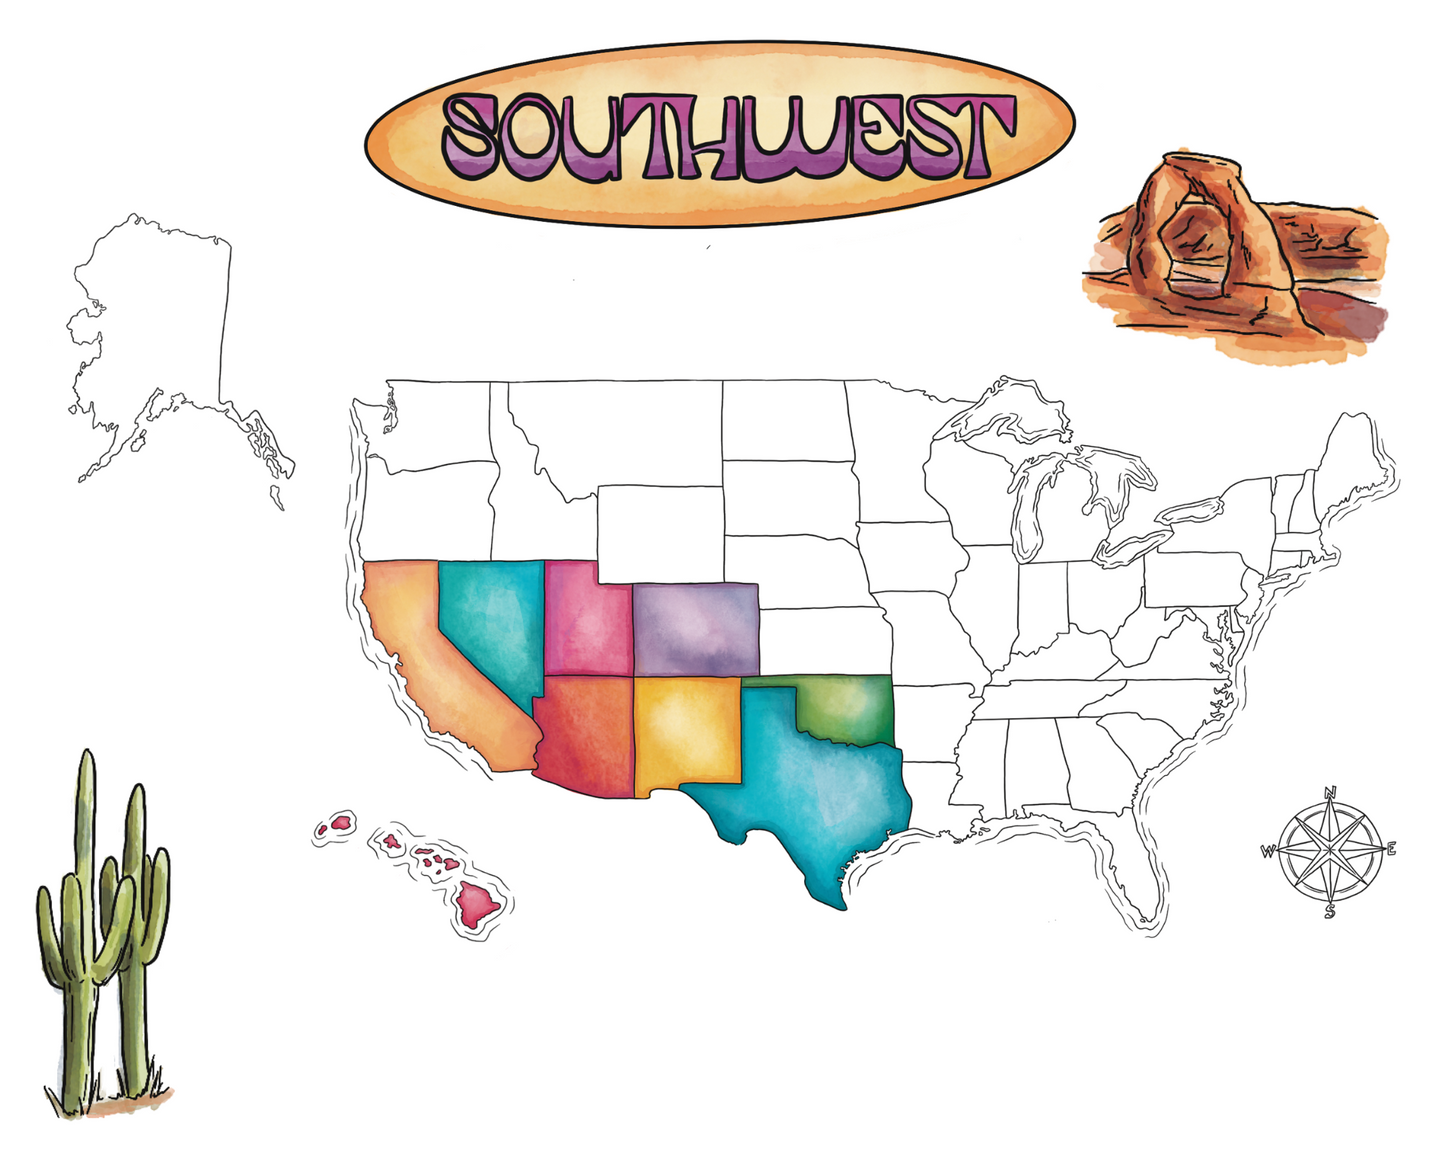 Our 50 States Full Unit Study: SOUTHWEST